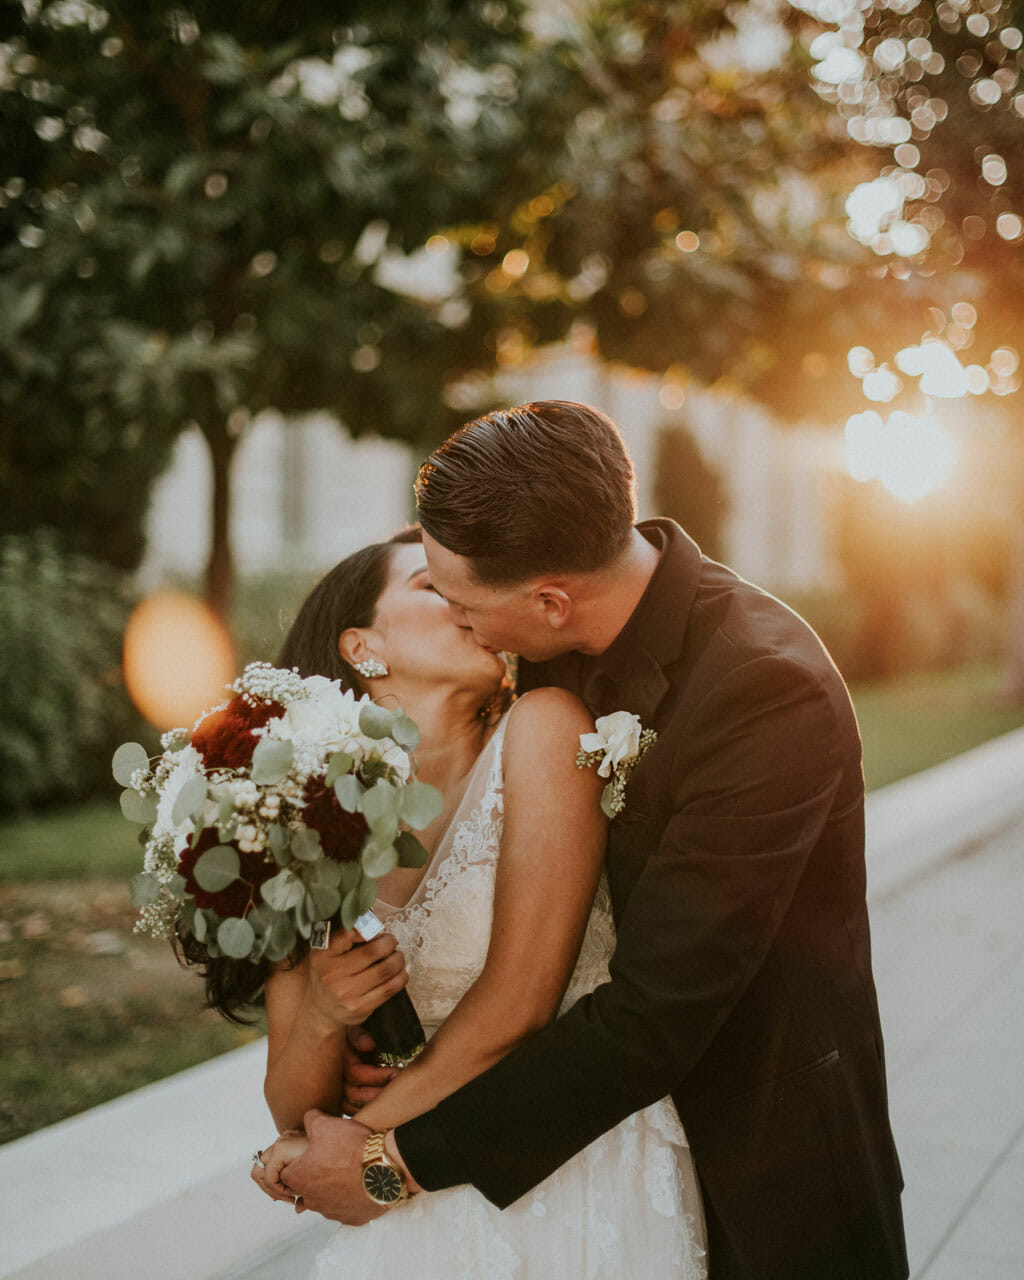 wedding couple with bouquet kissing in golden hour light near noor banquet halls pasadena